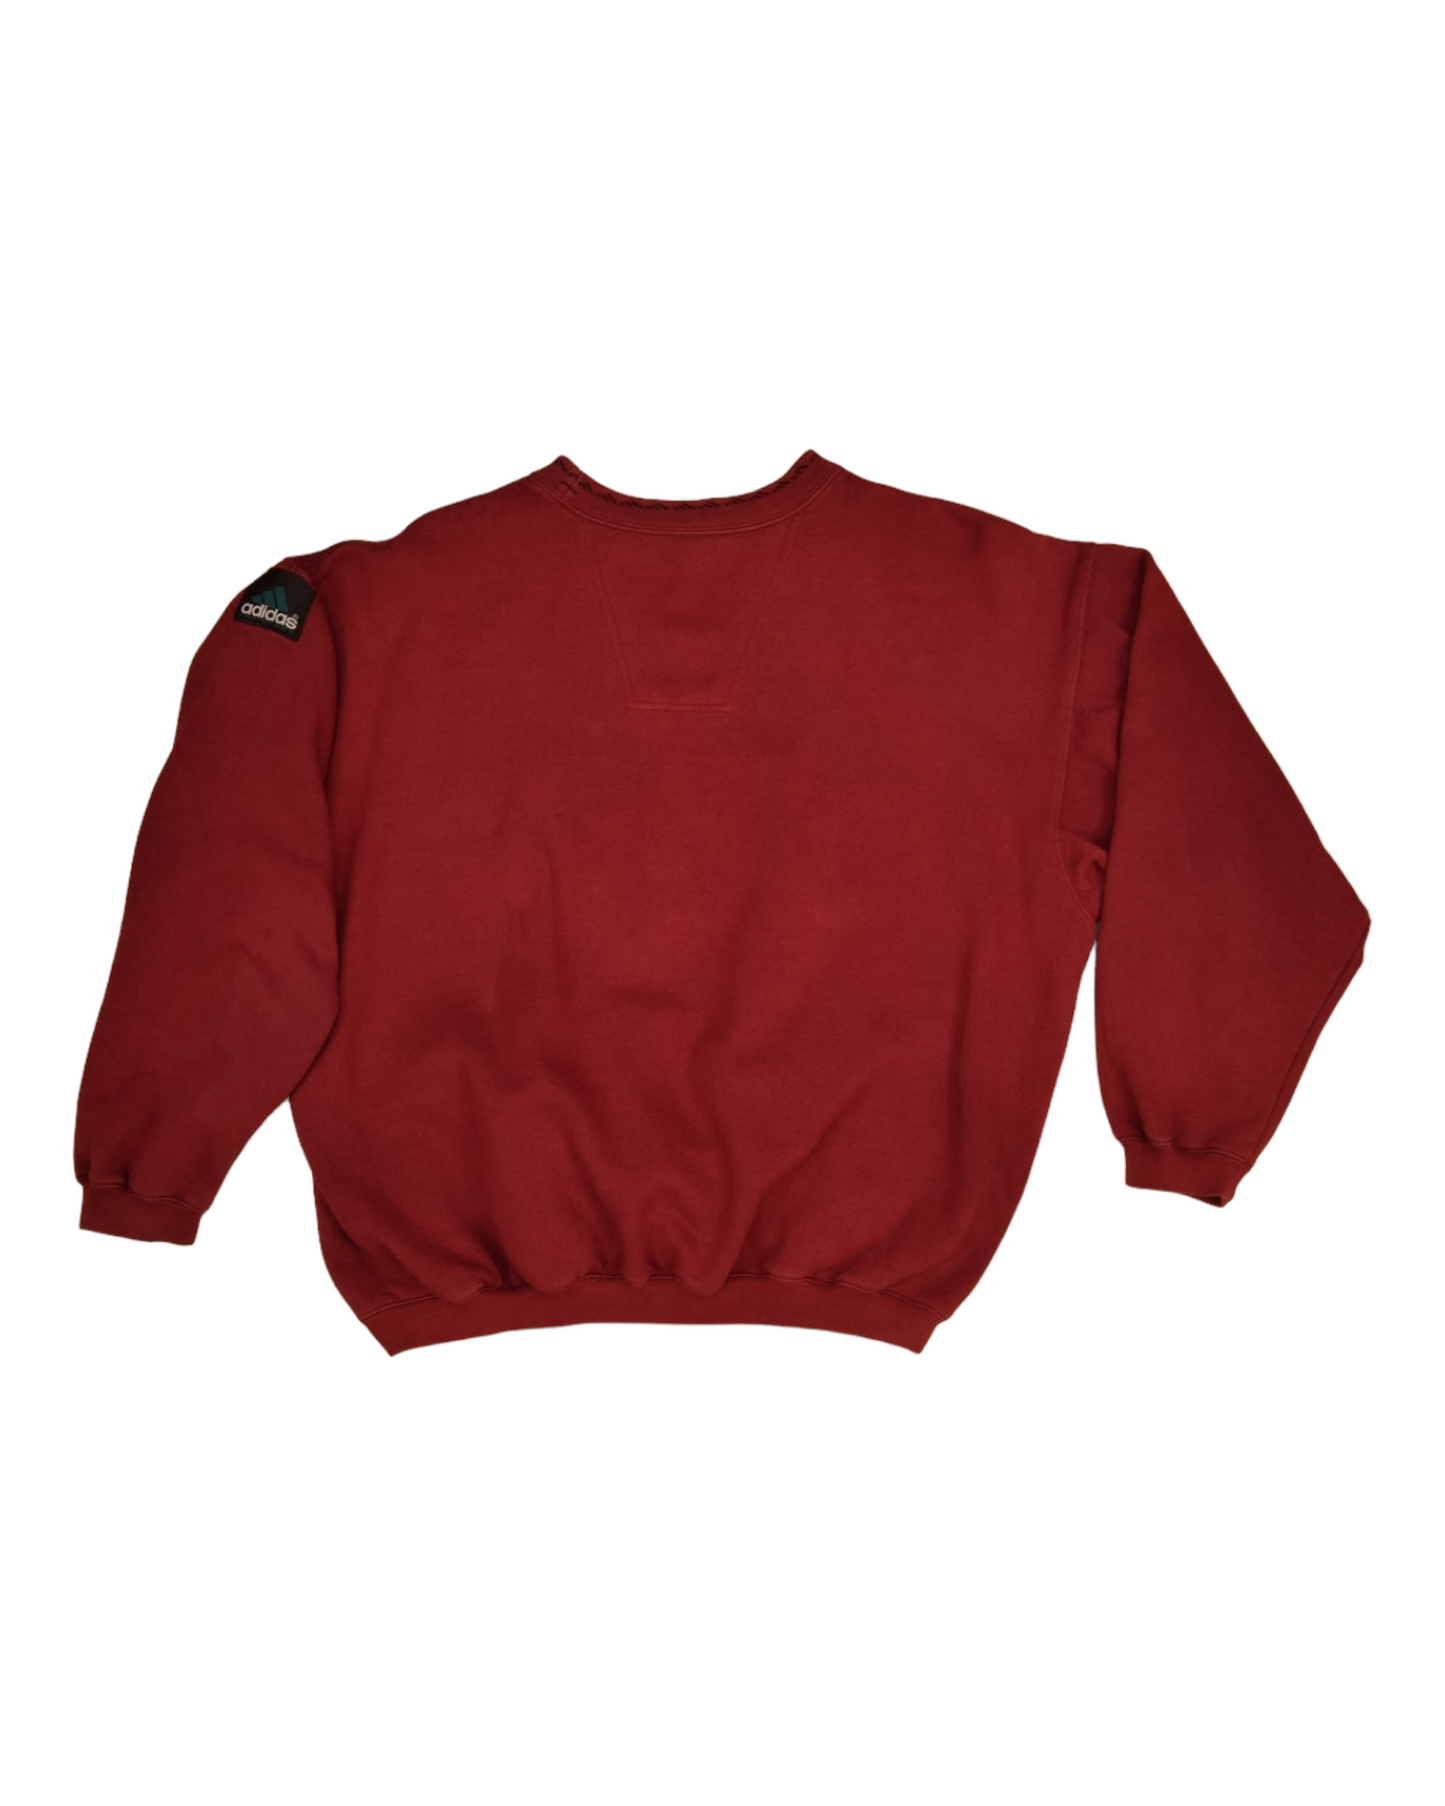 Vintage 90's Adidas Equipment Sweatshirt Crew Neck Size L Burgundy